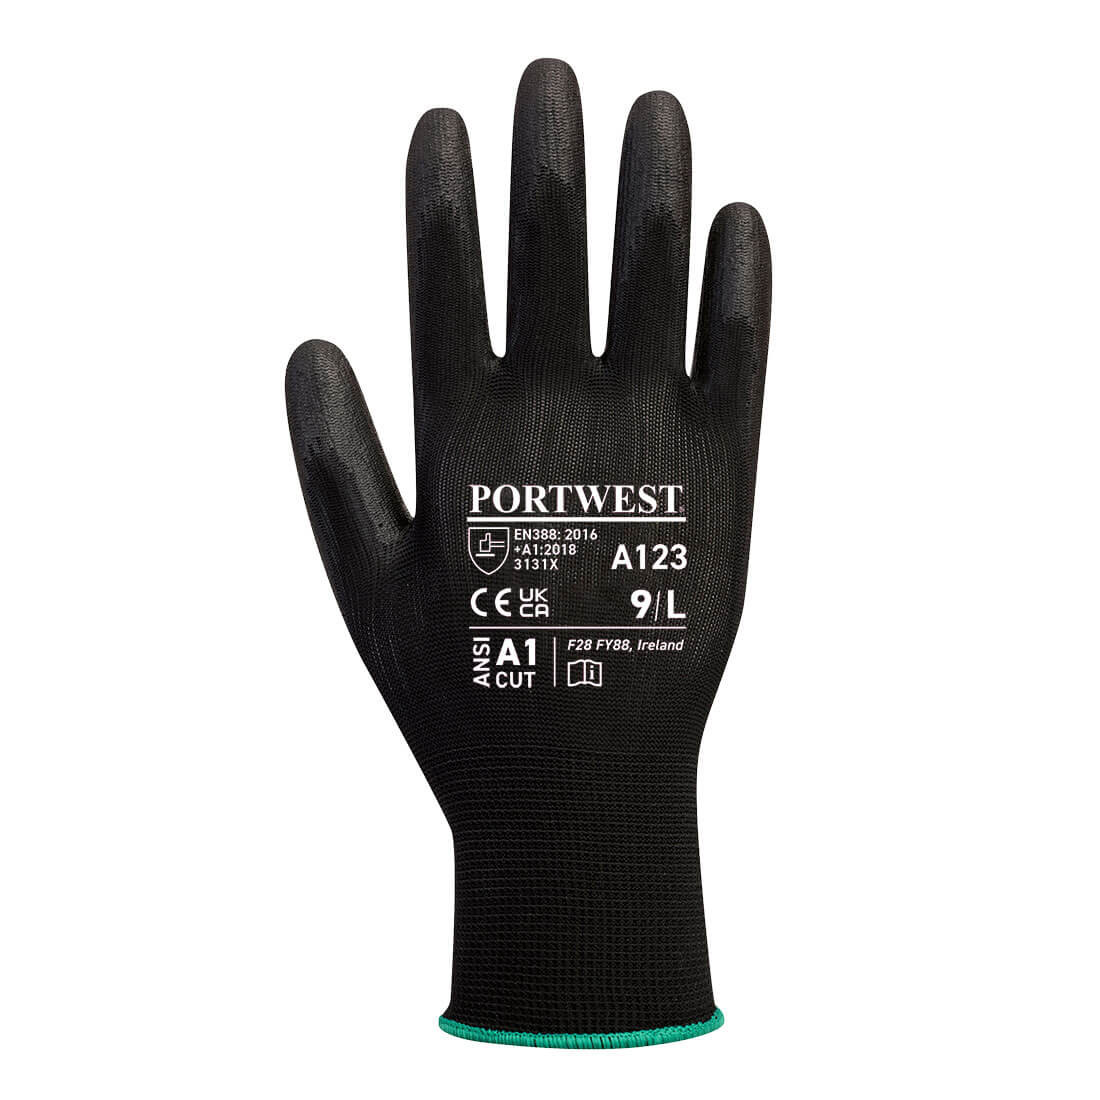 PU Palm Glove Latex Free - Full Carton (144) - Personal protection